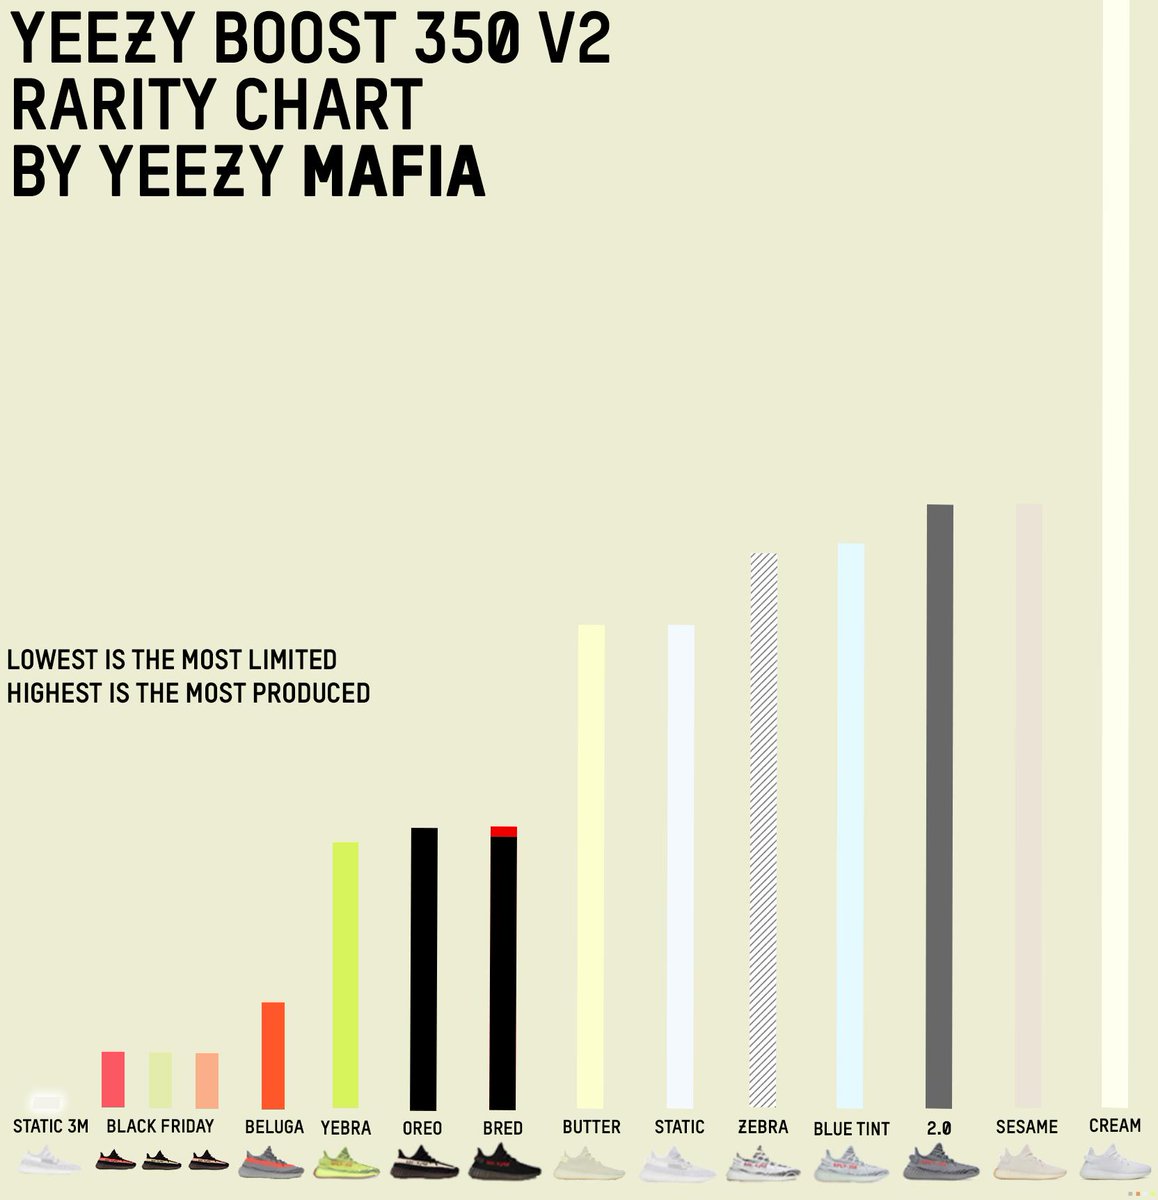 yeezy availability chart